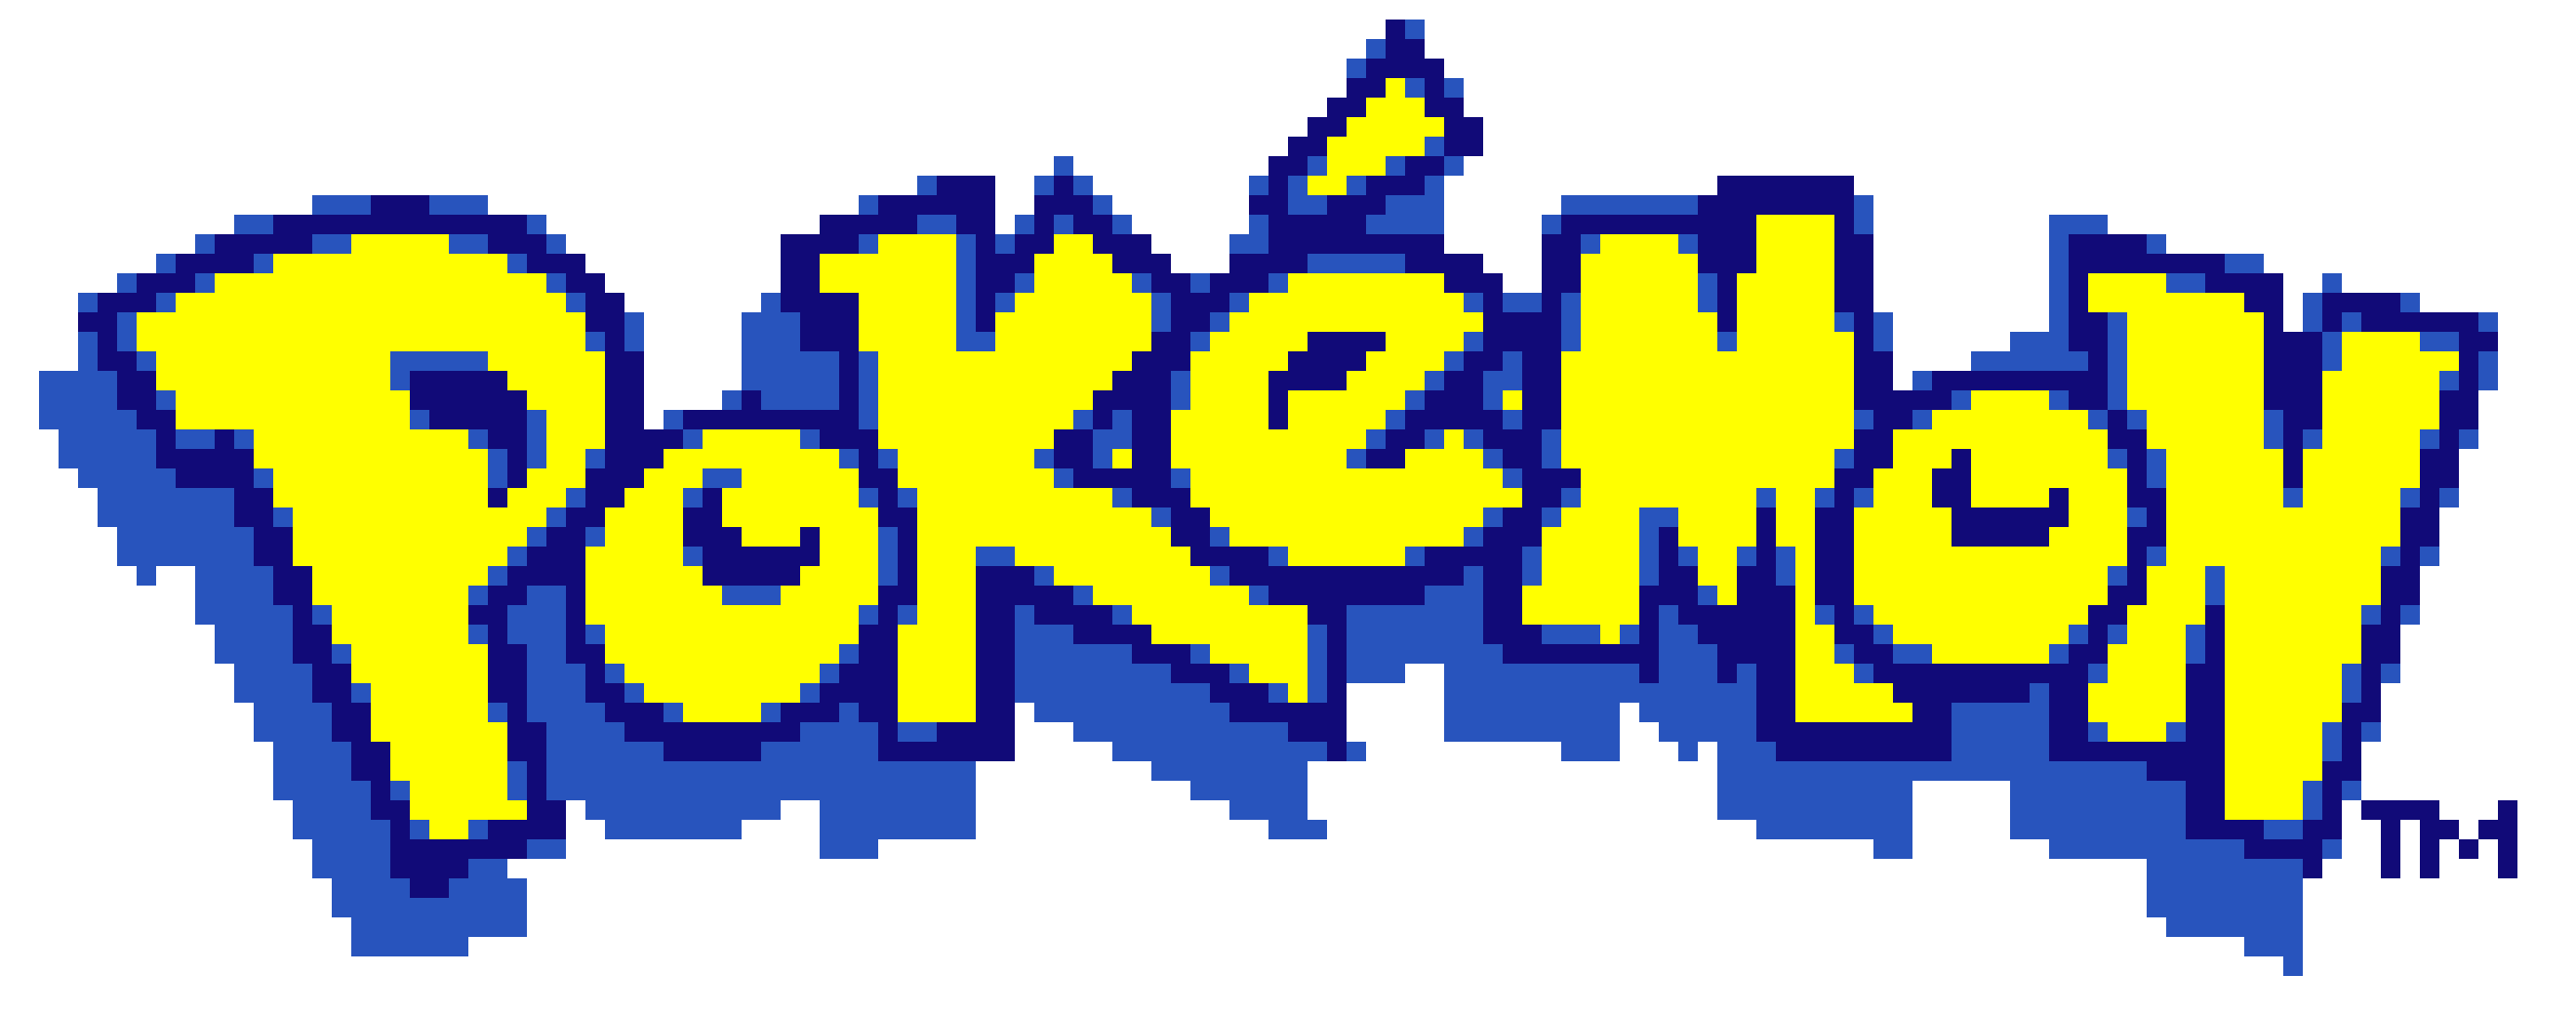 Pokemon Logo PNG Transparent Image